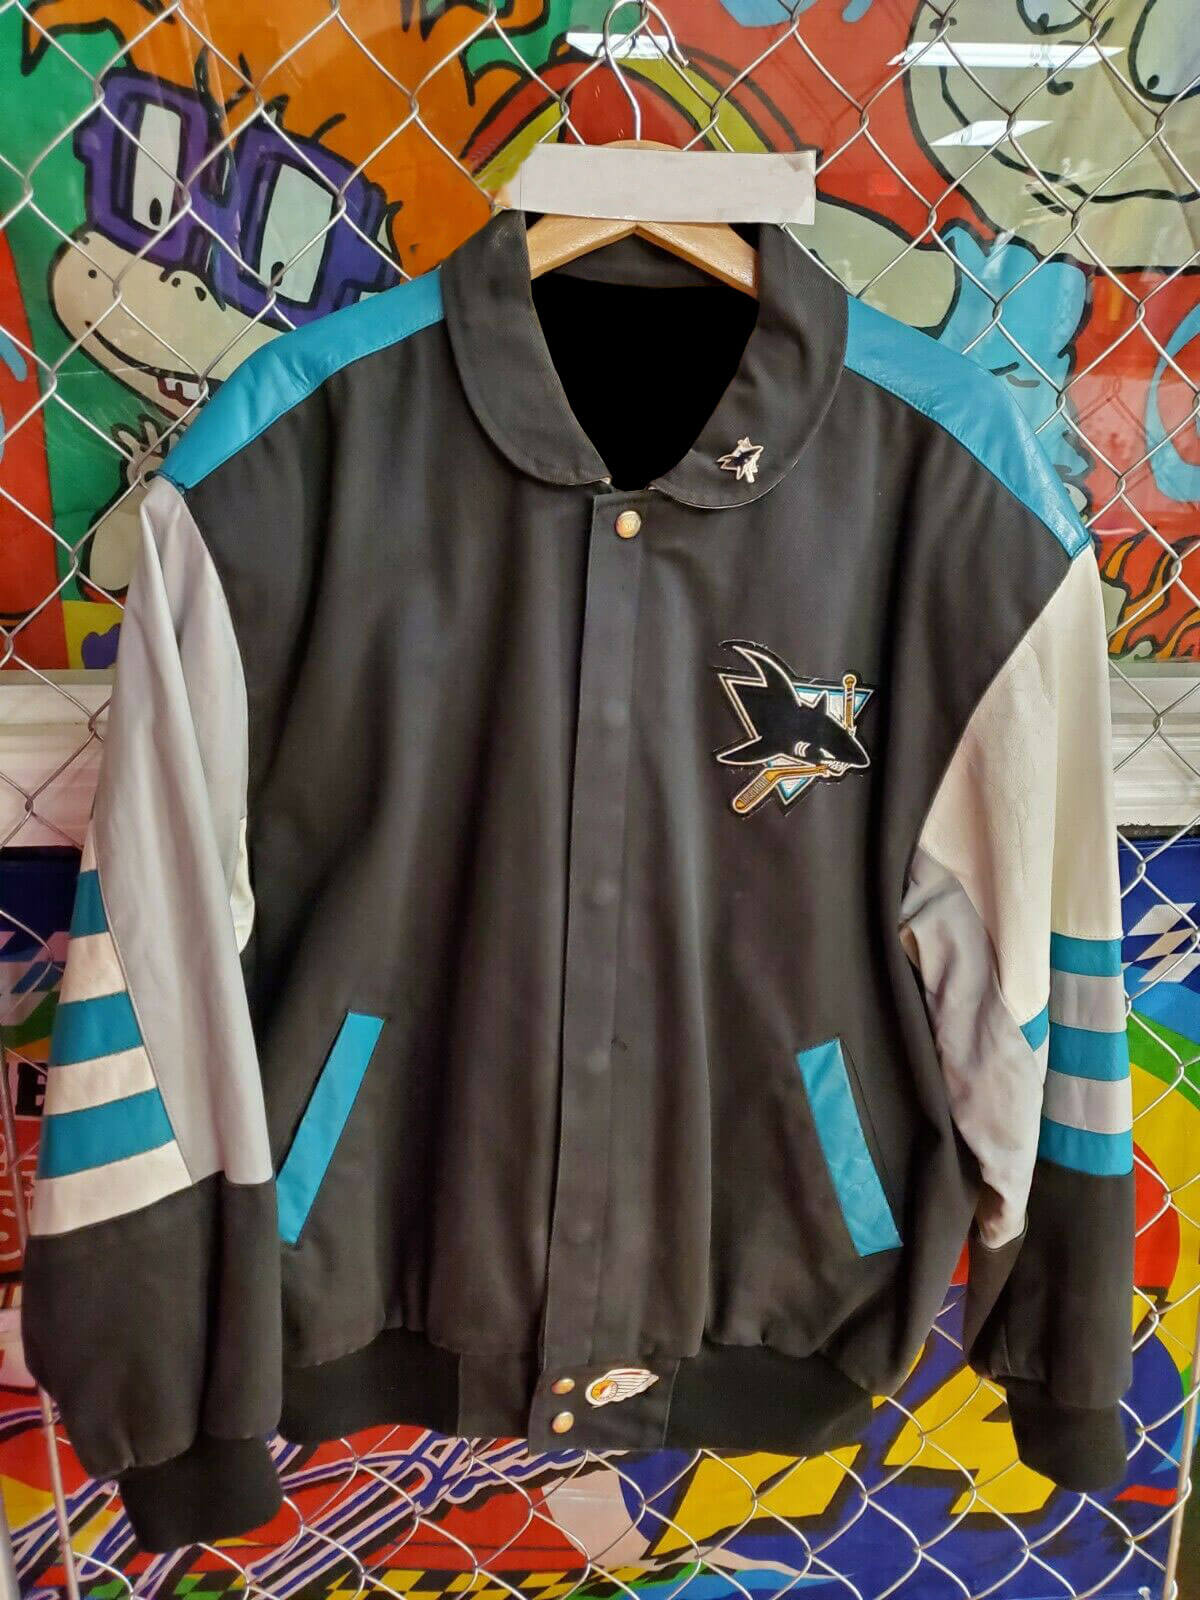 Vintage Jeff Hamilton San Jose Sharks Leather Jacket